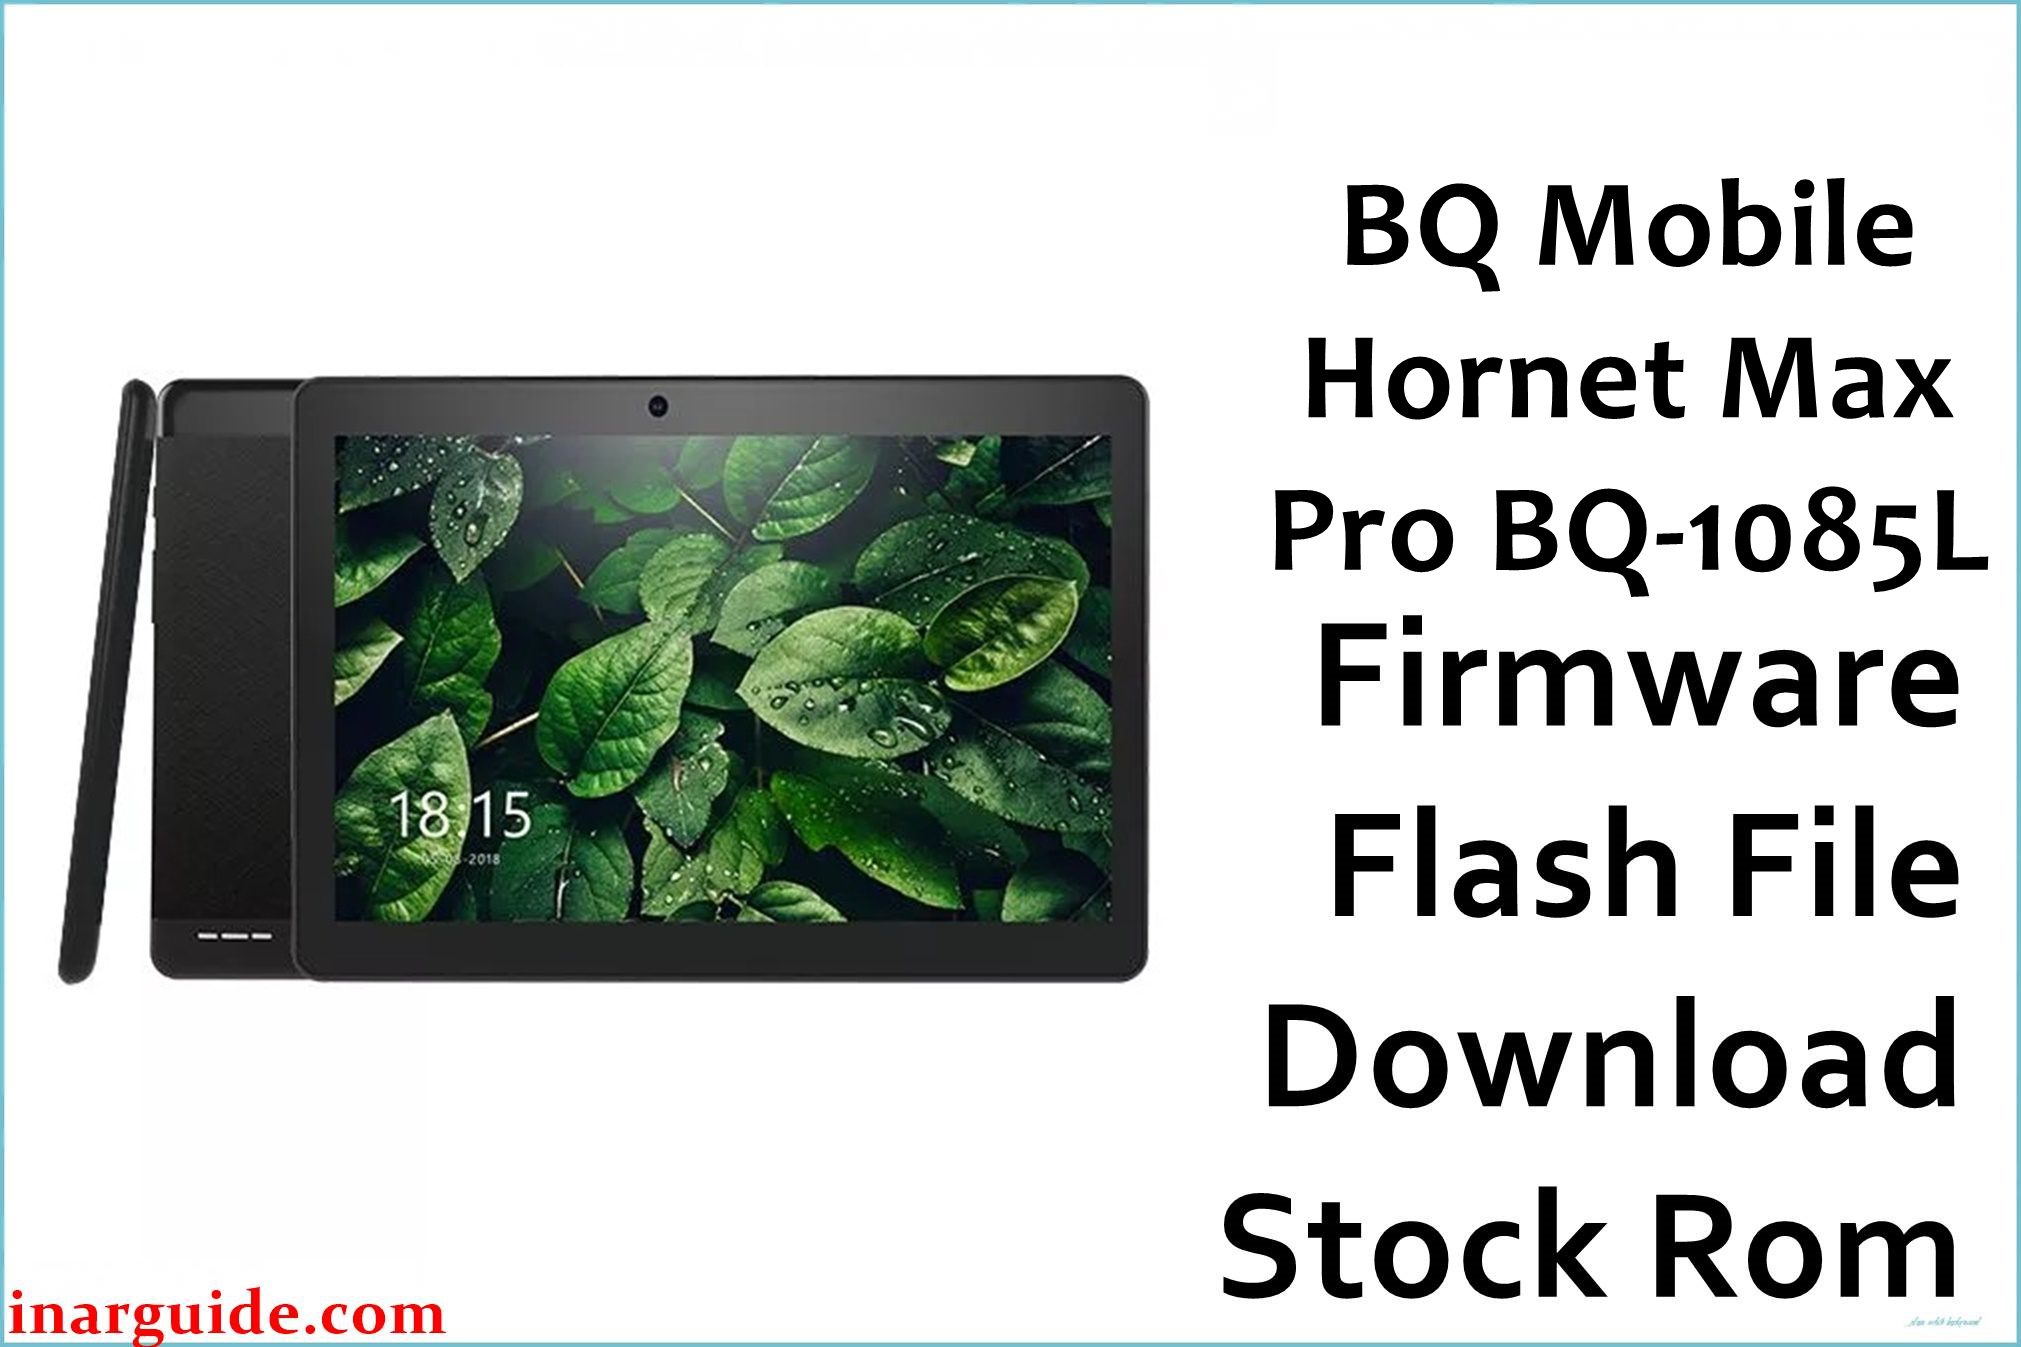 BQ Mobile Hornet Max Pro BQ 1085L